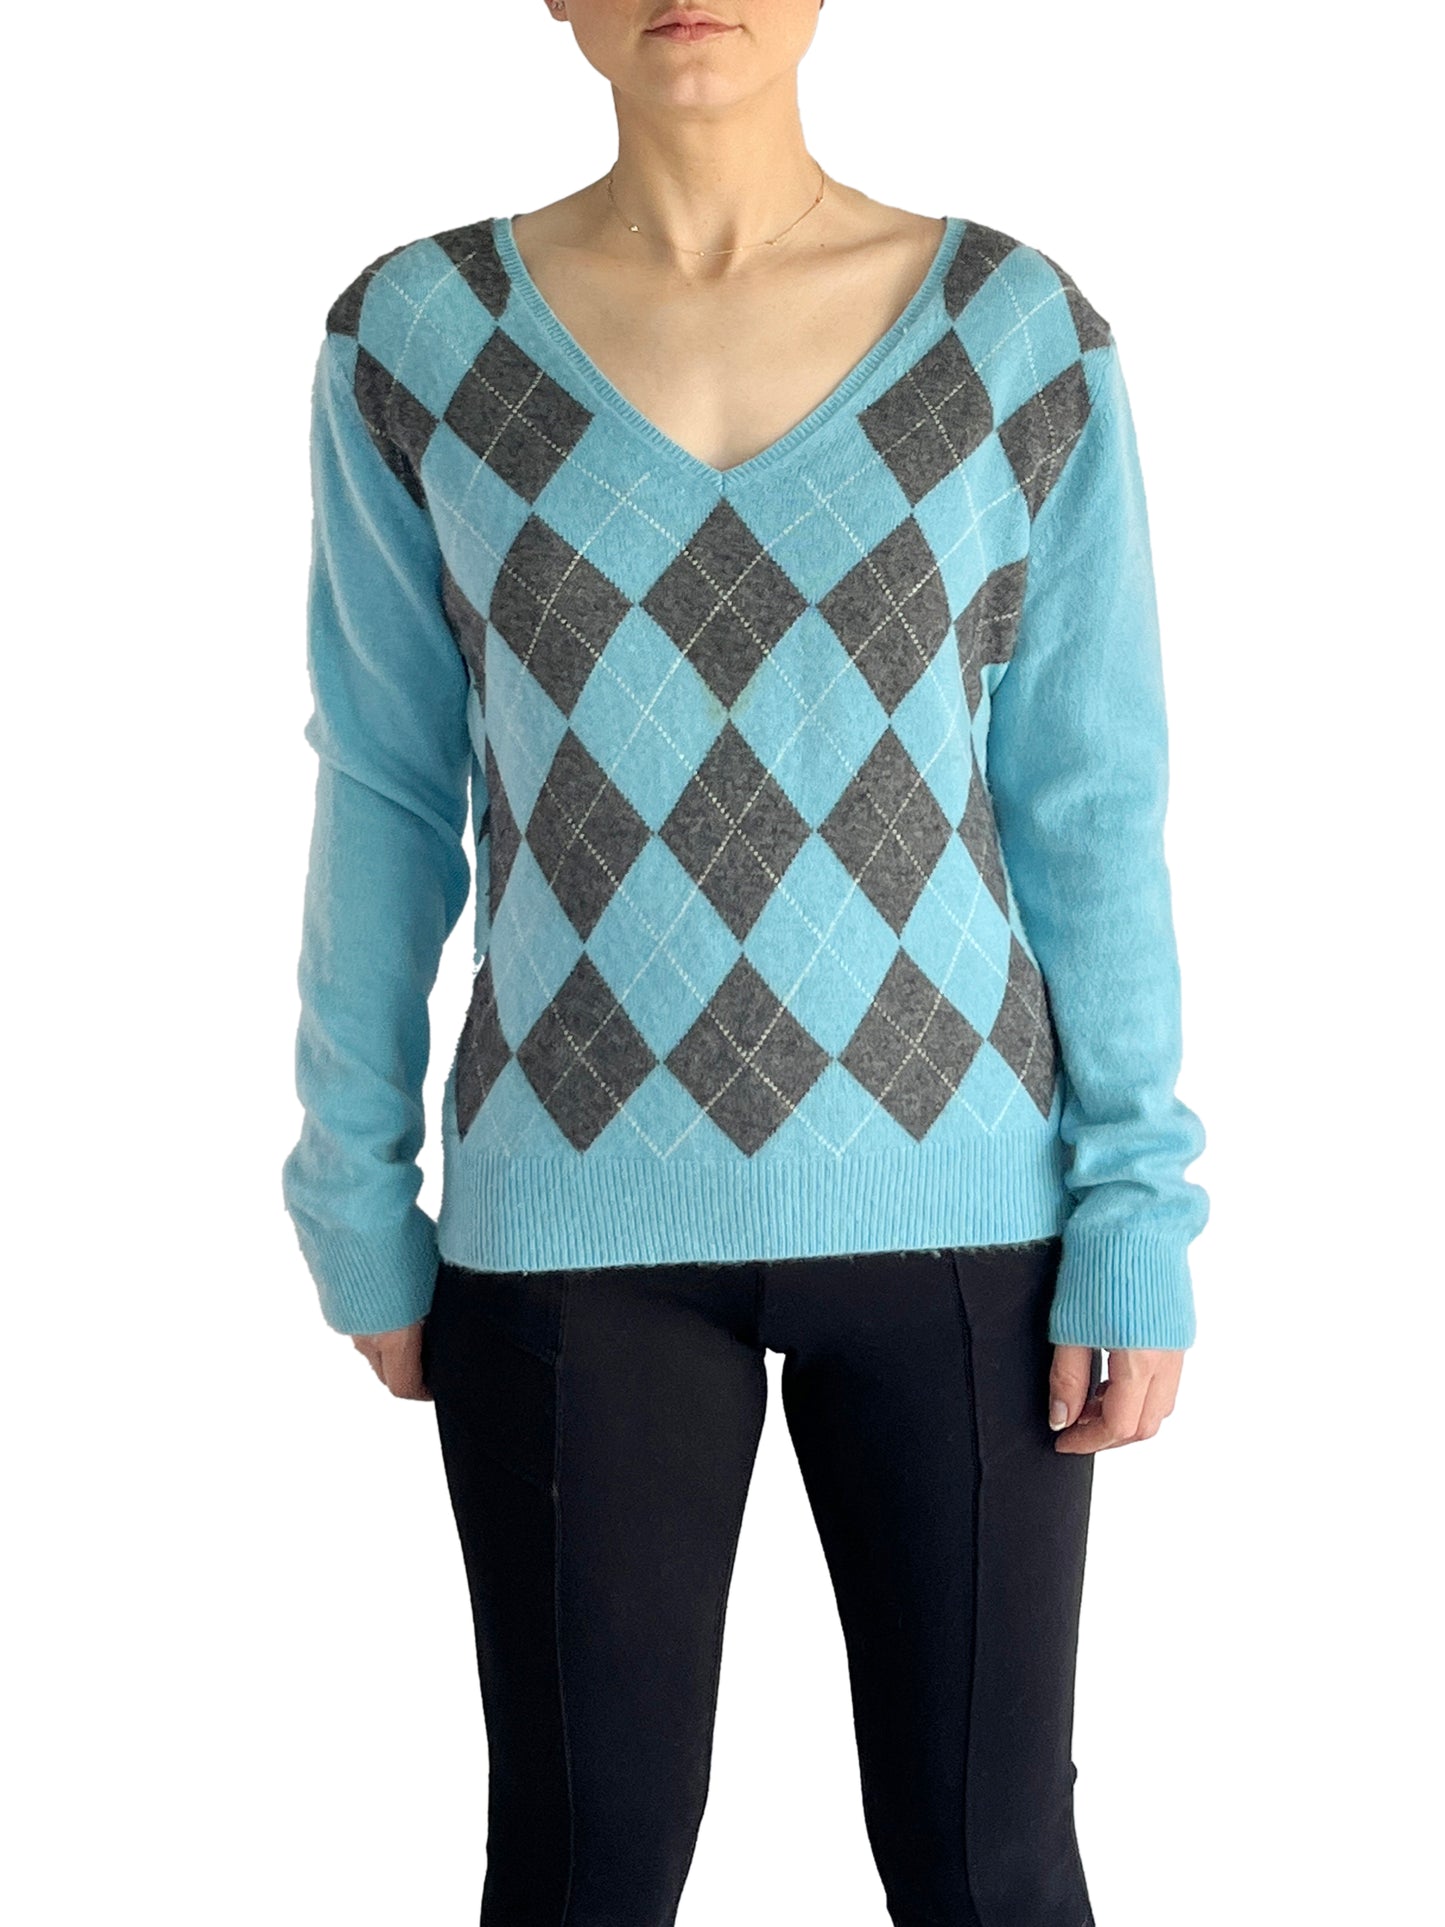 Apt. 9 Top Sweater Light Blue, Gray Size L SKU 000049